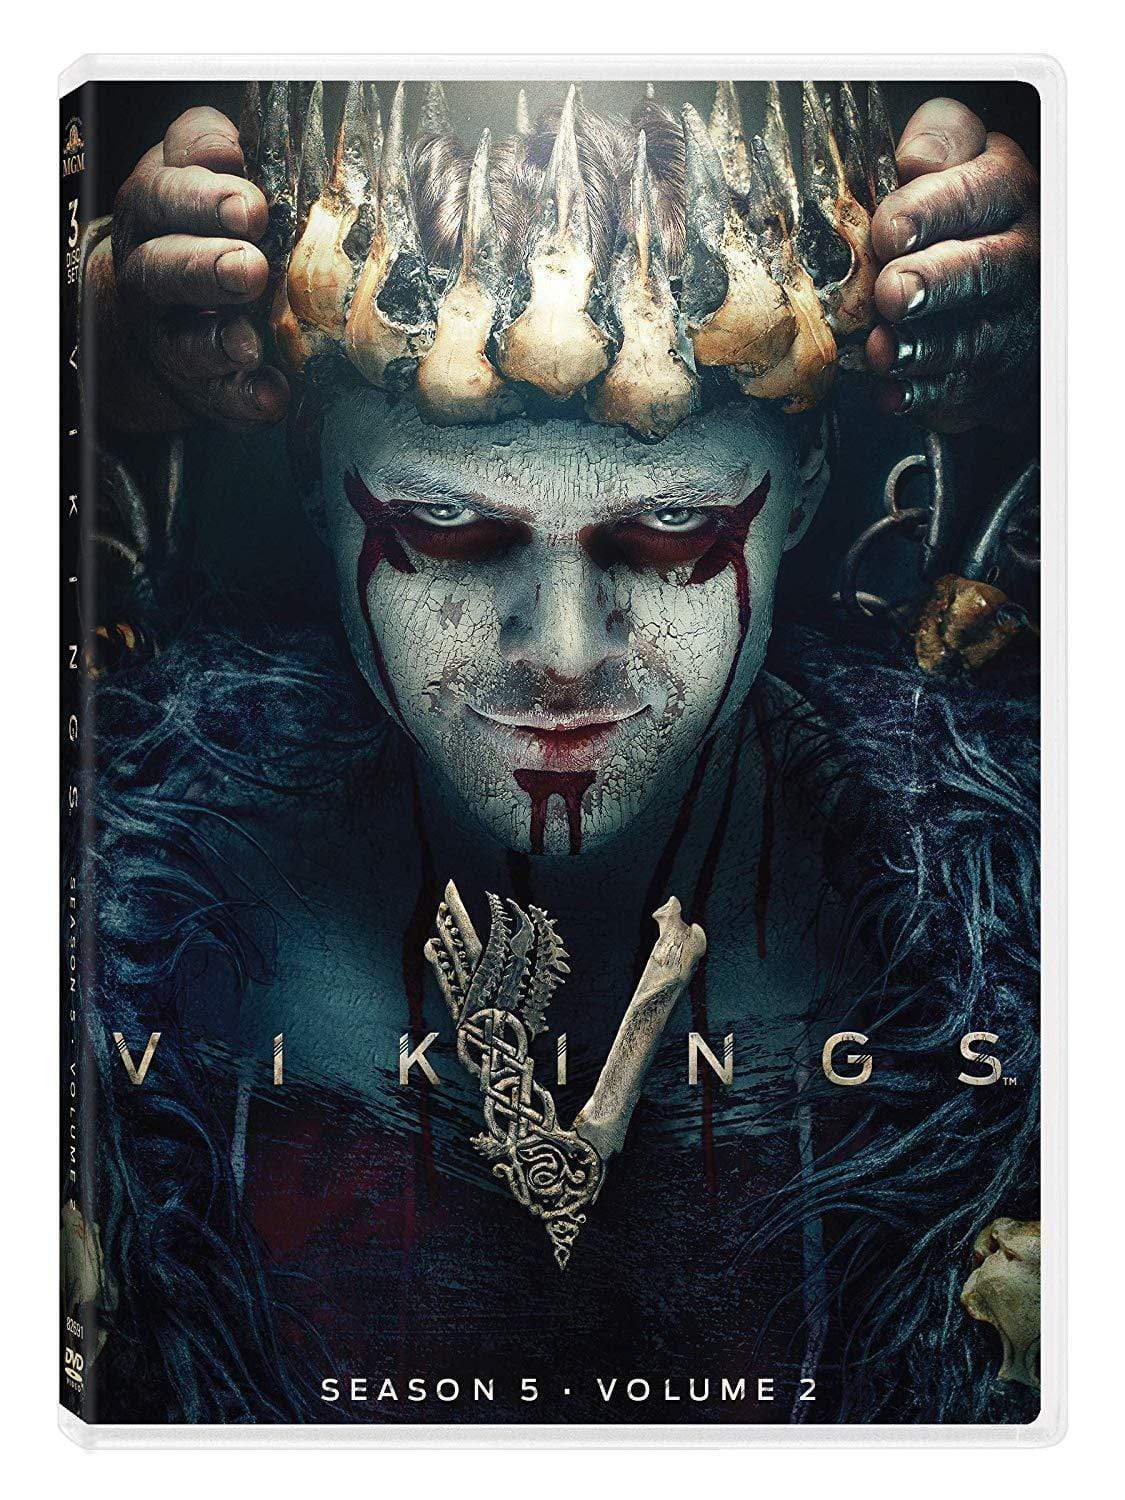 Vikings Season 5 Volume 2 DVD 20th Century Fox DVDs & Blu-ray Discs